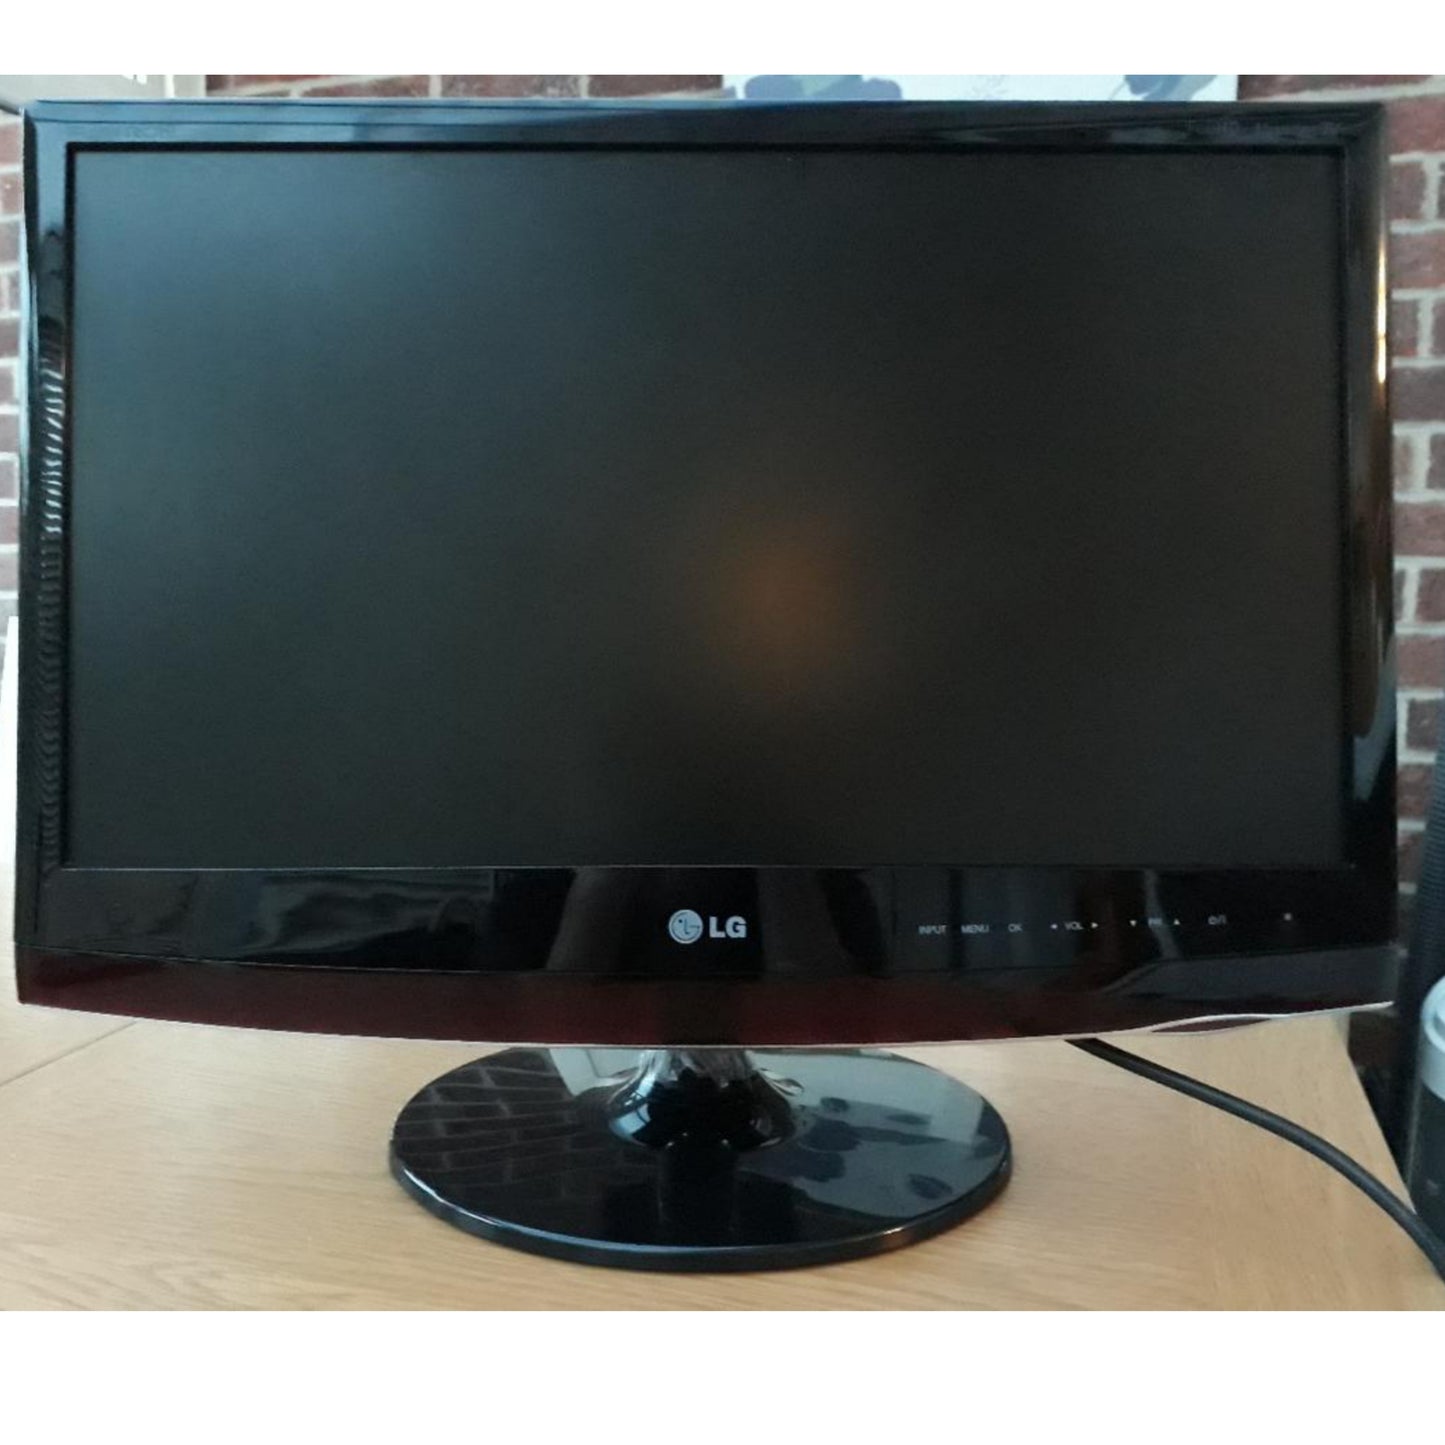 LG 22 Inch M2262DP Full HD LCD TV - Closer view